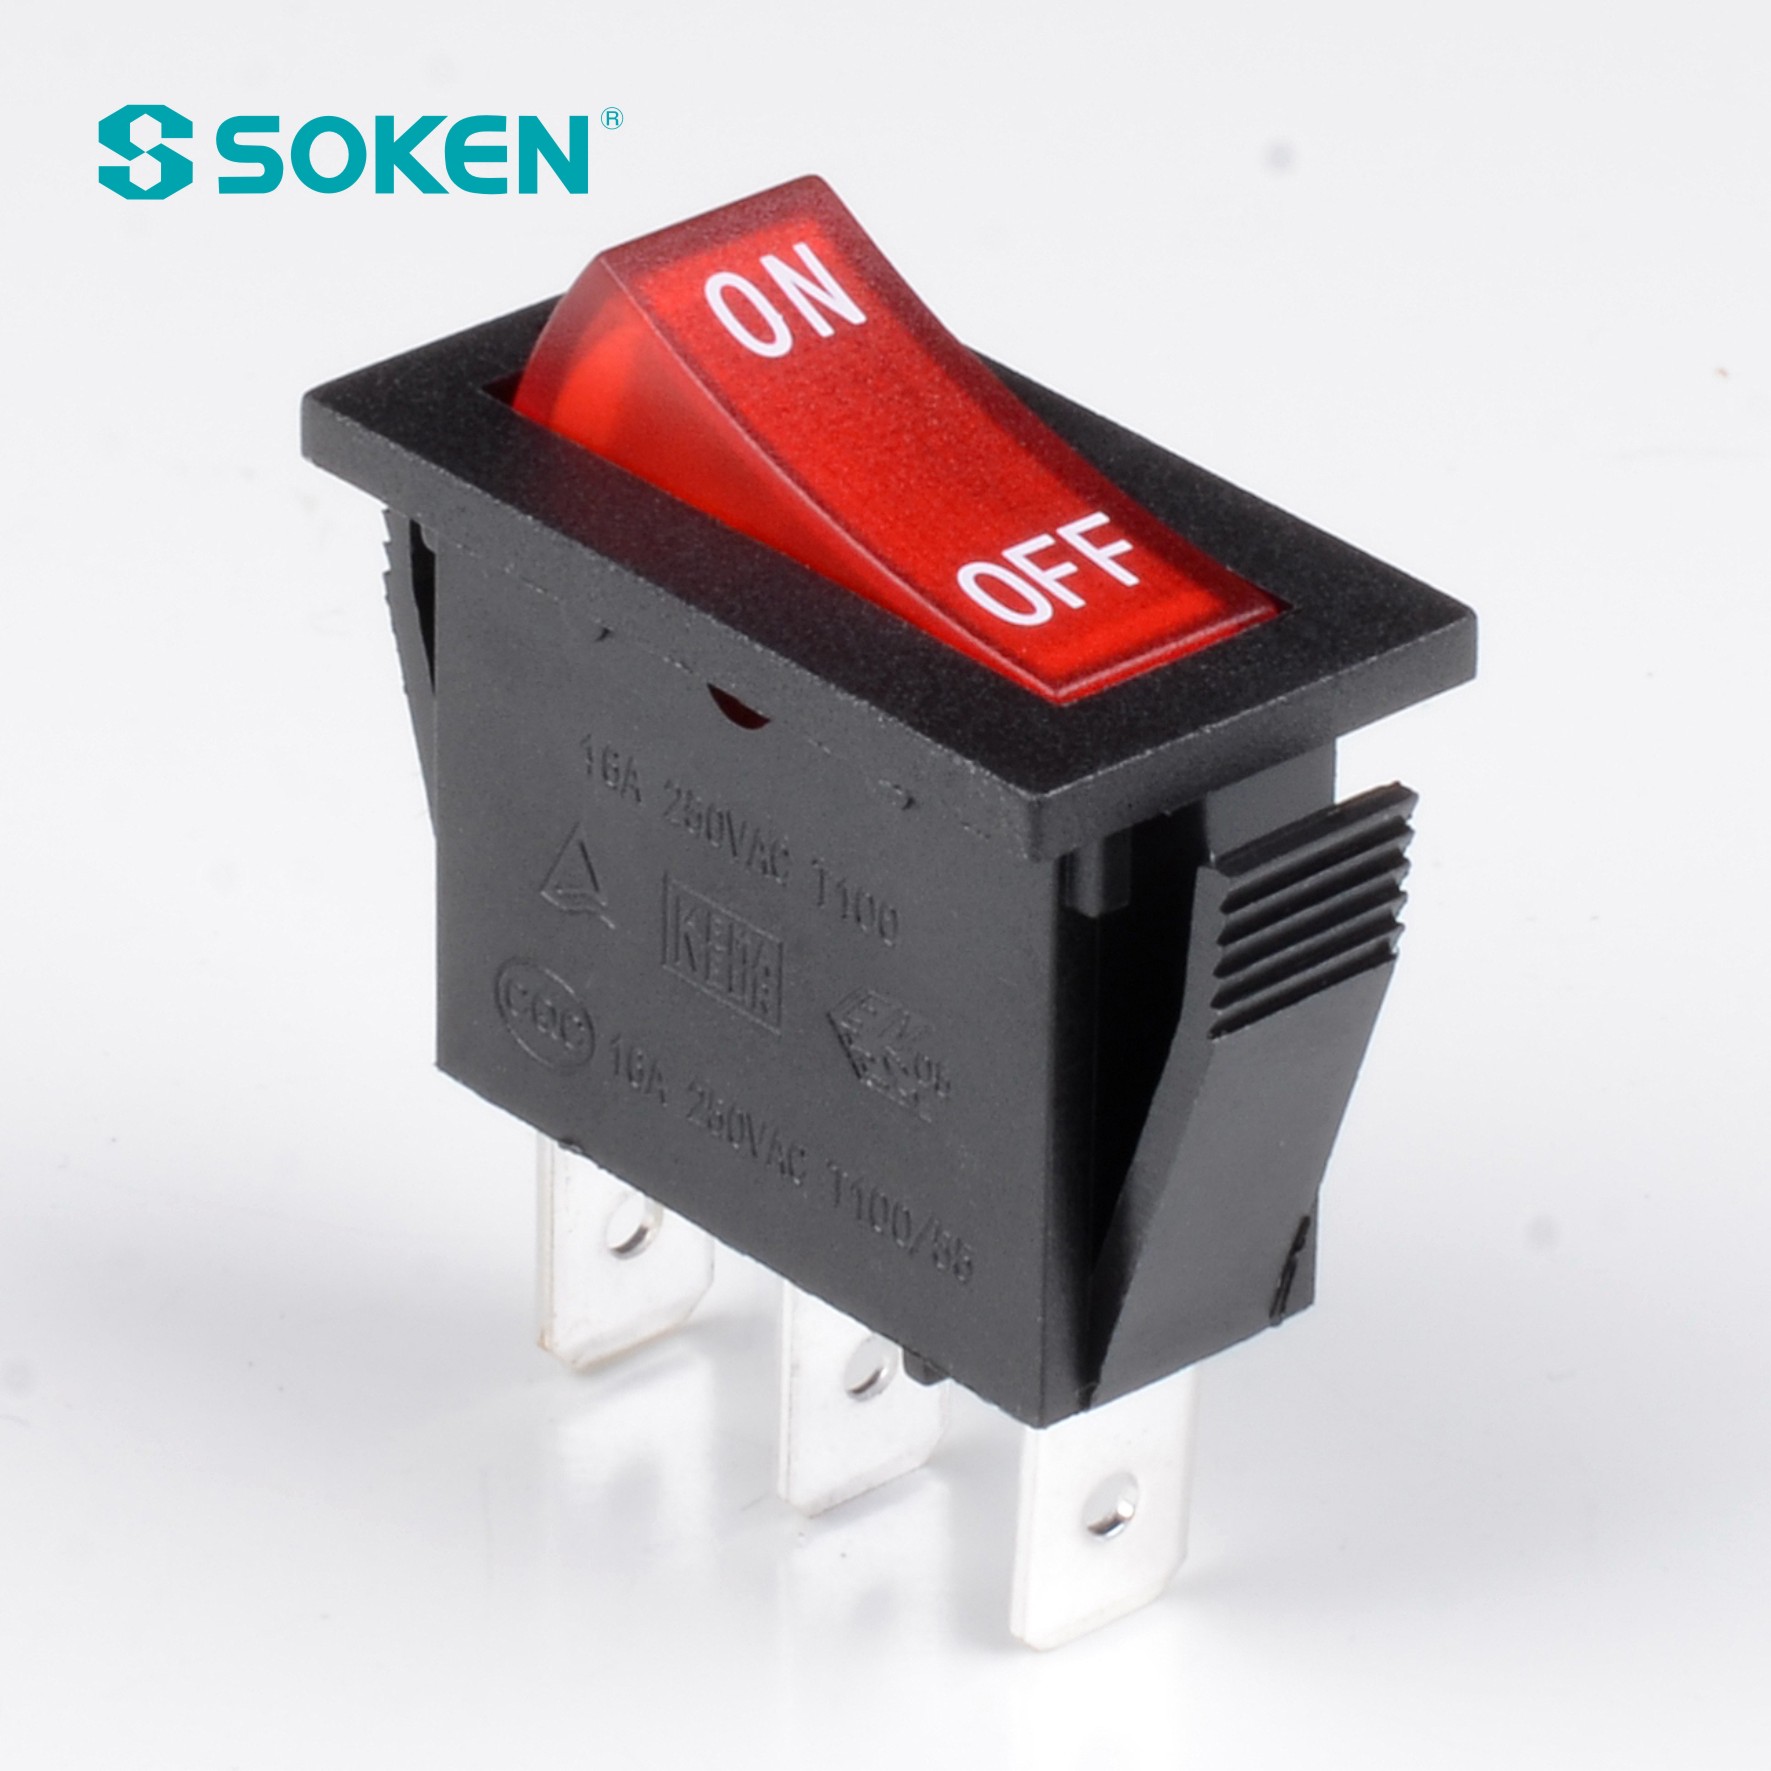 Soken Rk1-16 1X2 kwenye Rocker Switch